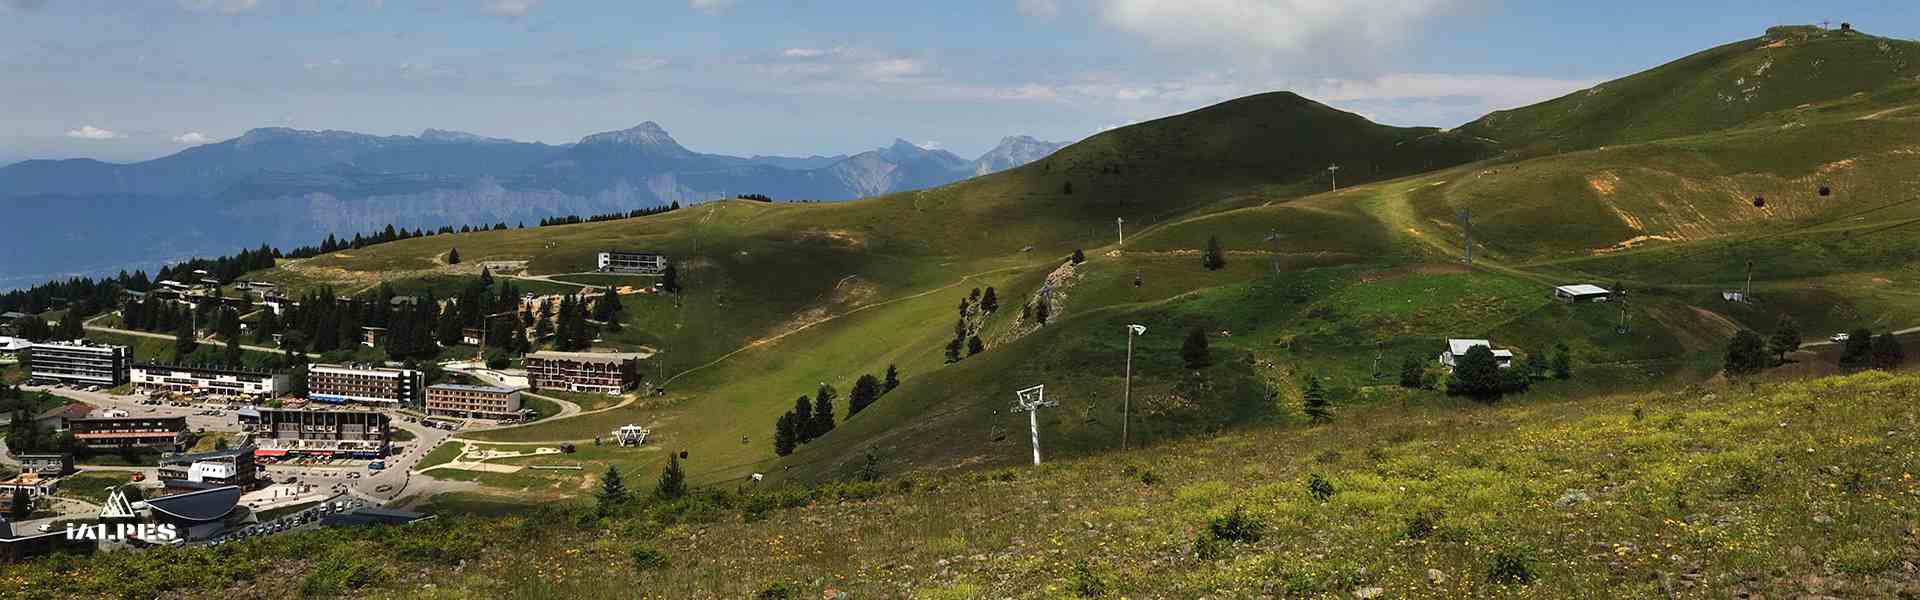 Massif de Belledonne, Isère